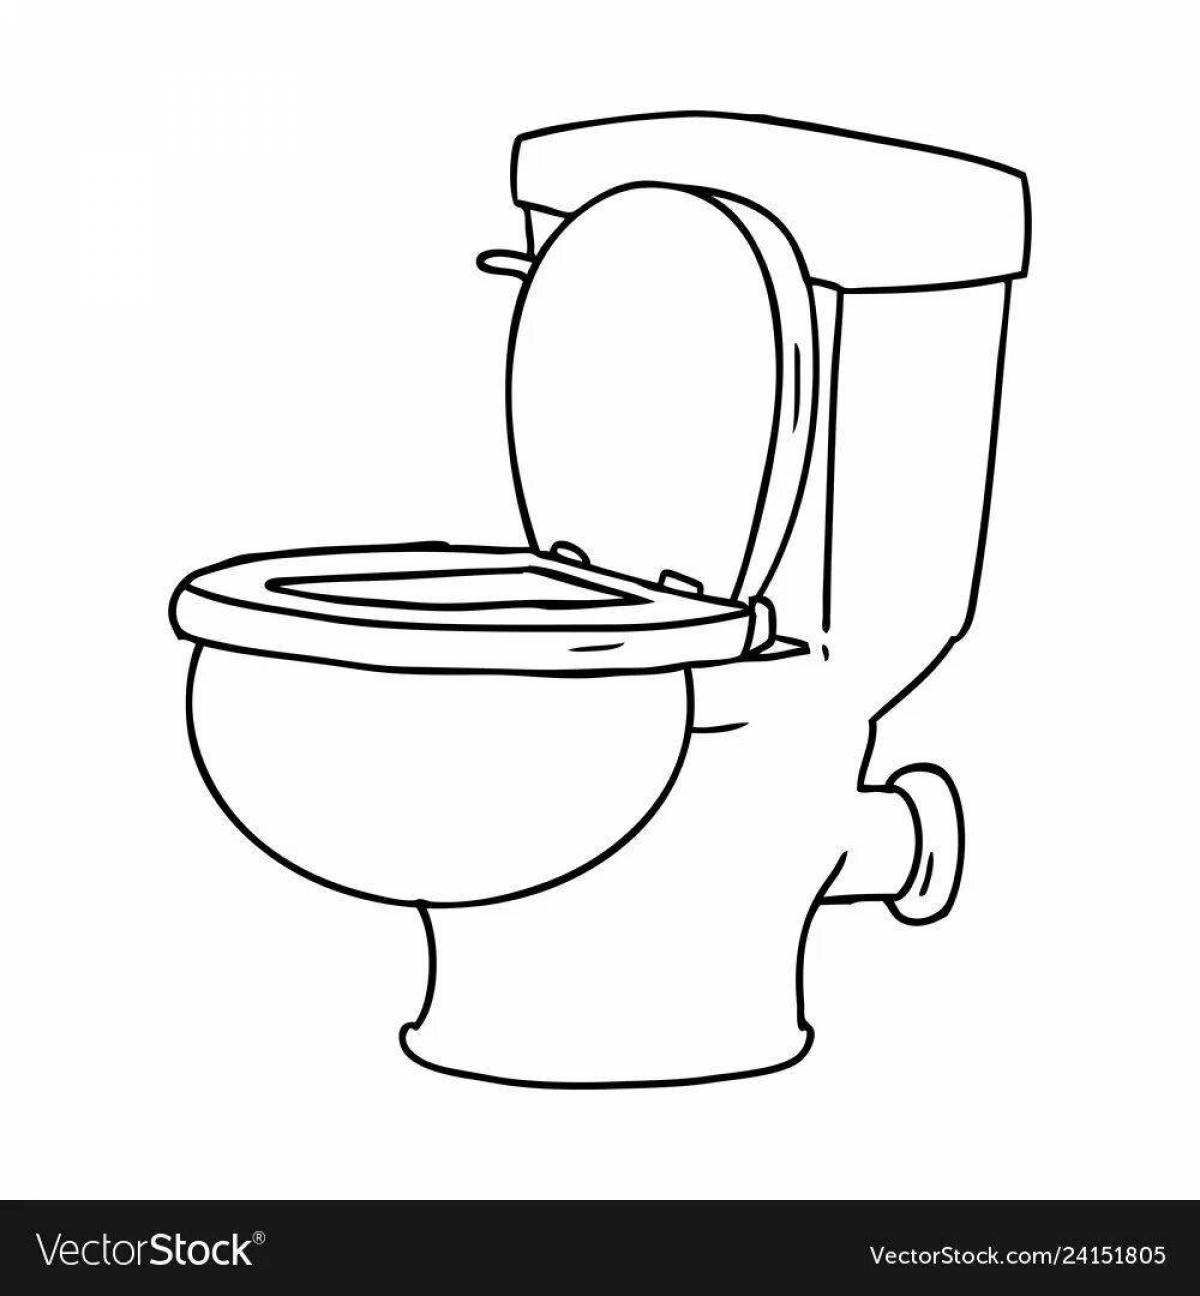 Junior toilet coloring page